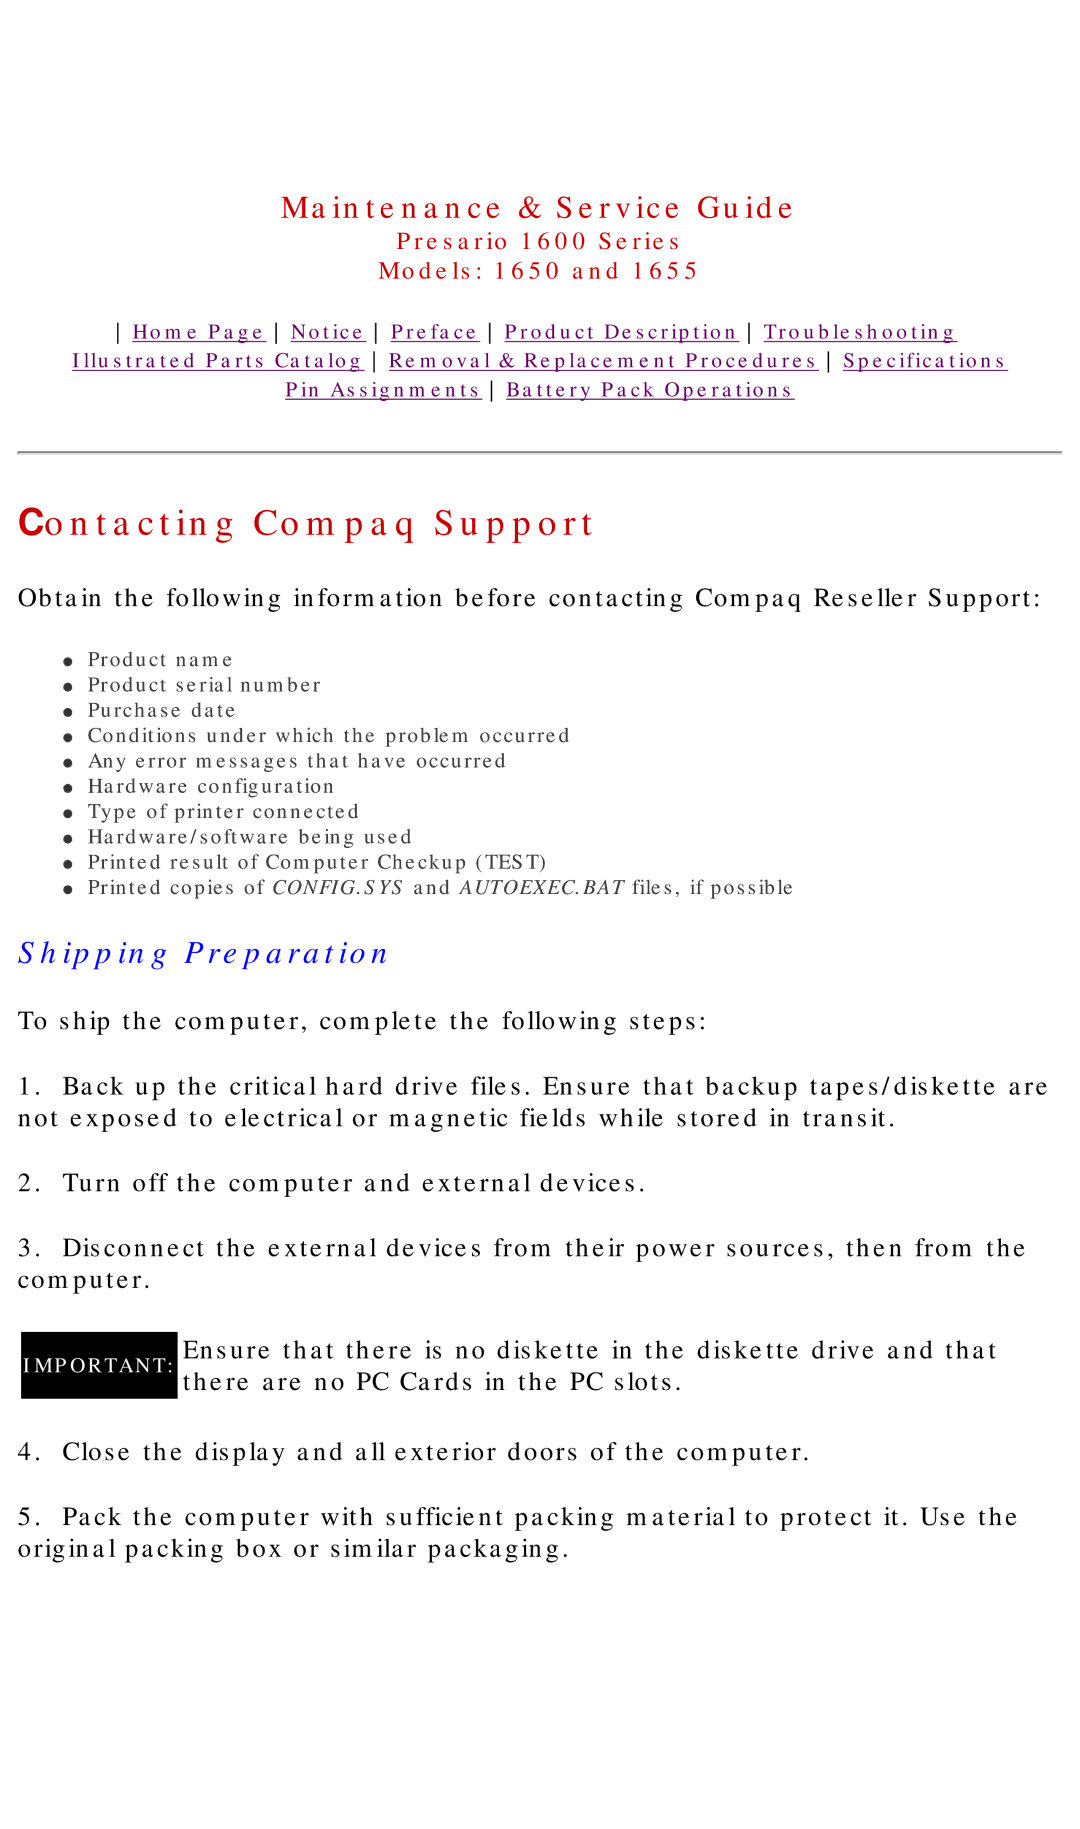 Compaq 1655, Presario 1600 Series, 1650 manual Contacting Compaq Support, Shipping Preparation 